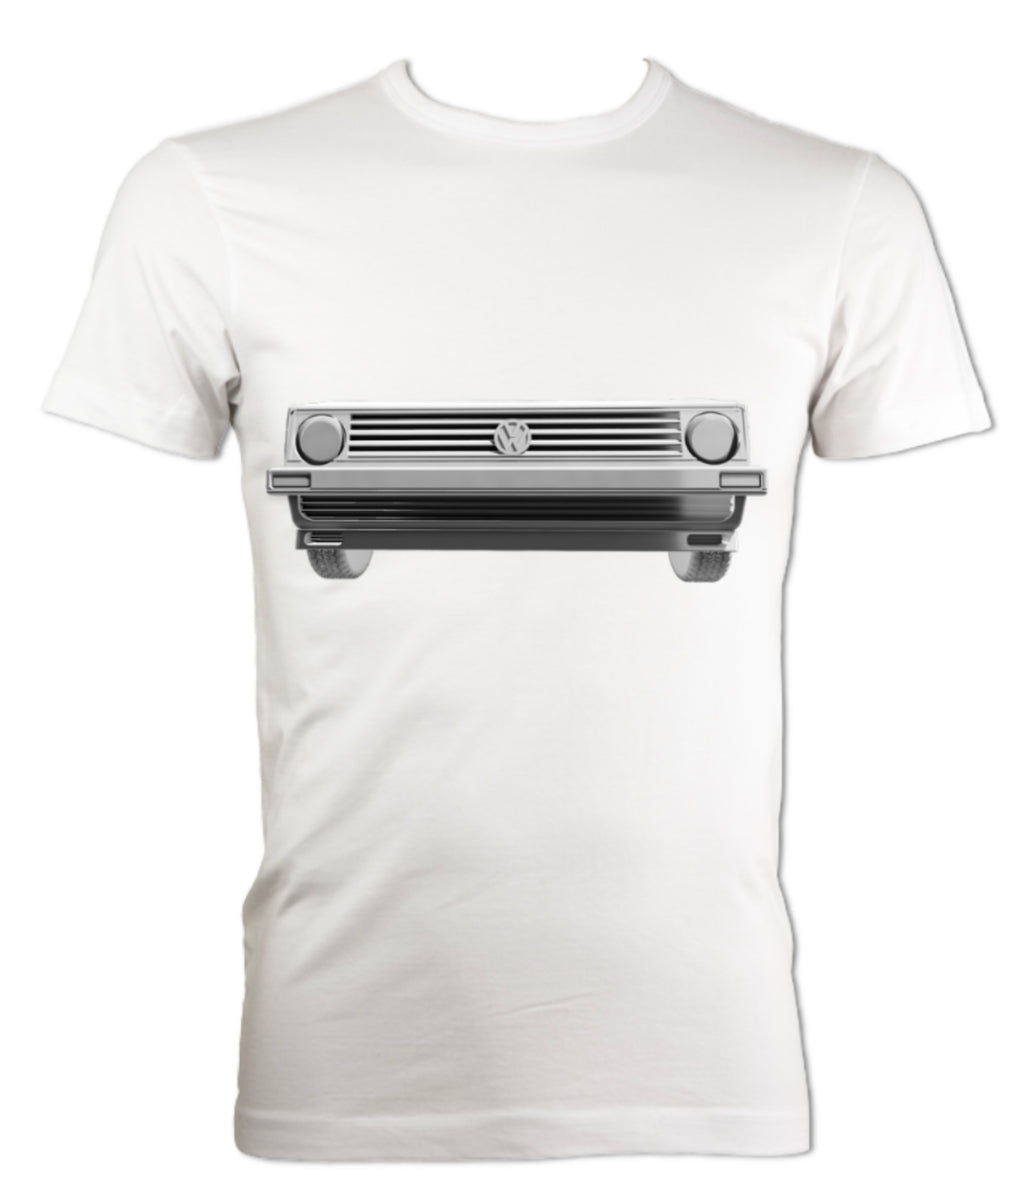 Golf GTI mk2 design T-shirt ,gym wear graphic tshirt